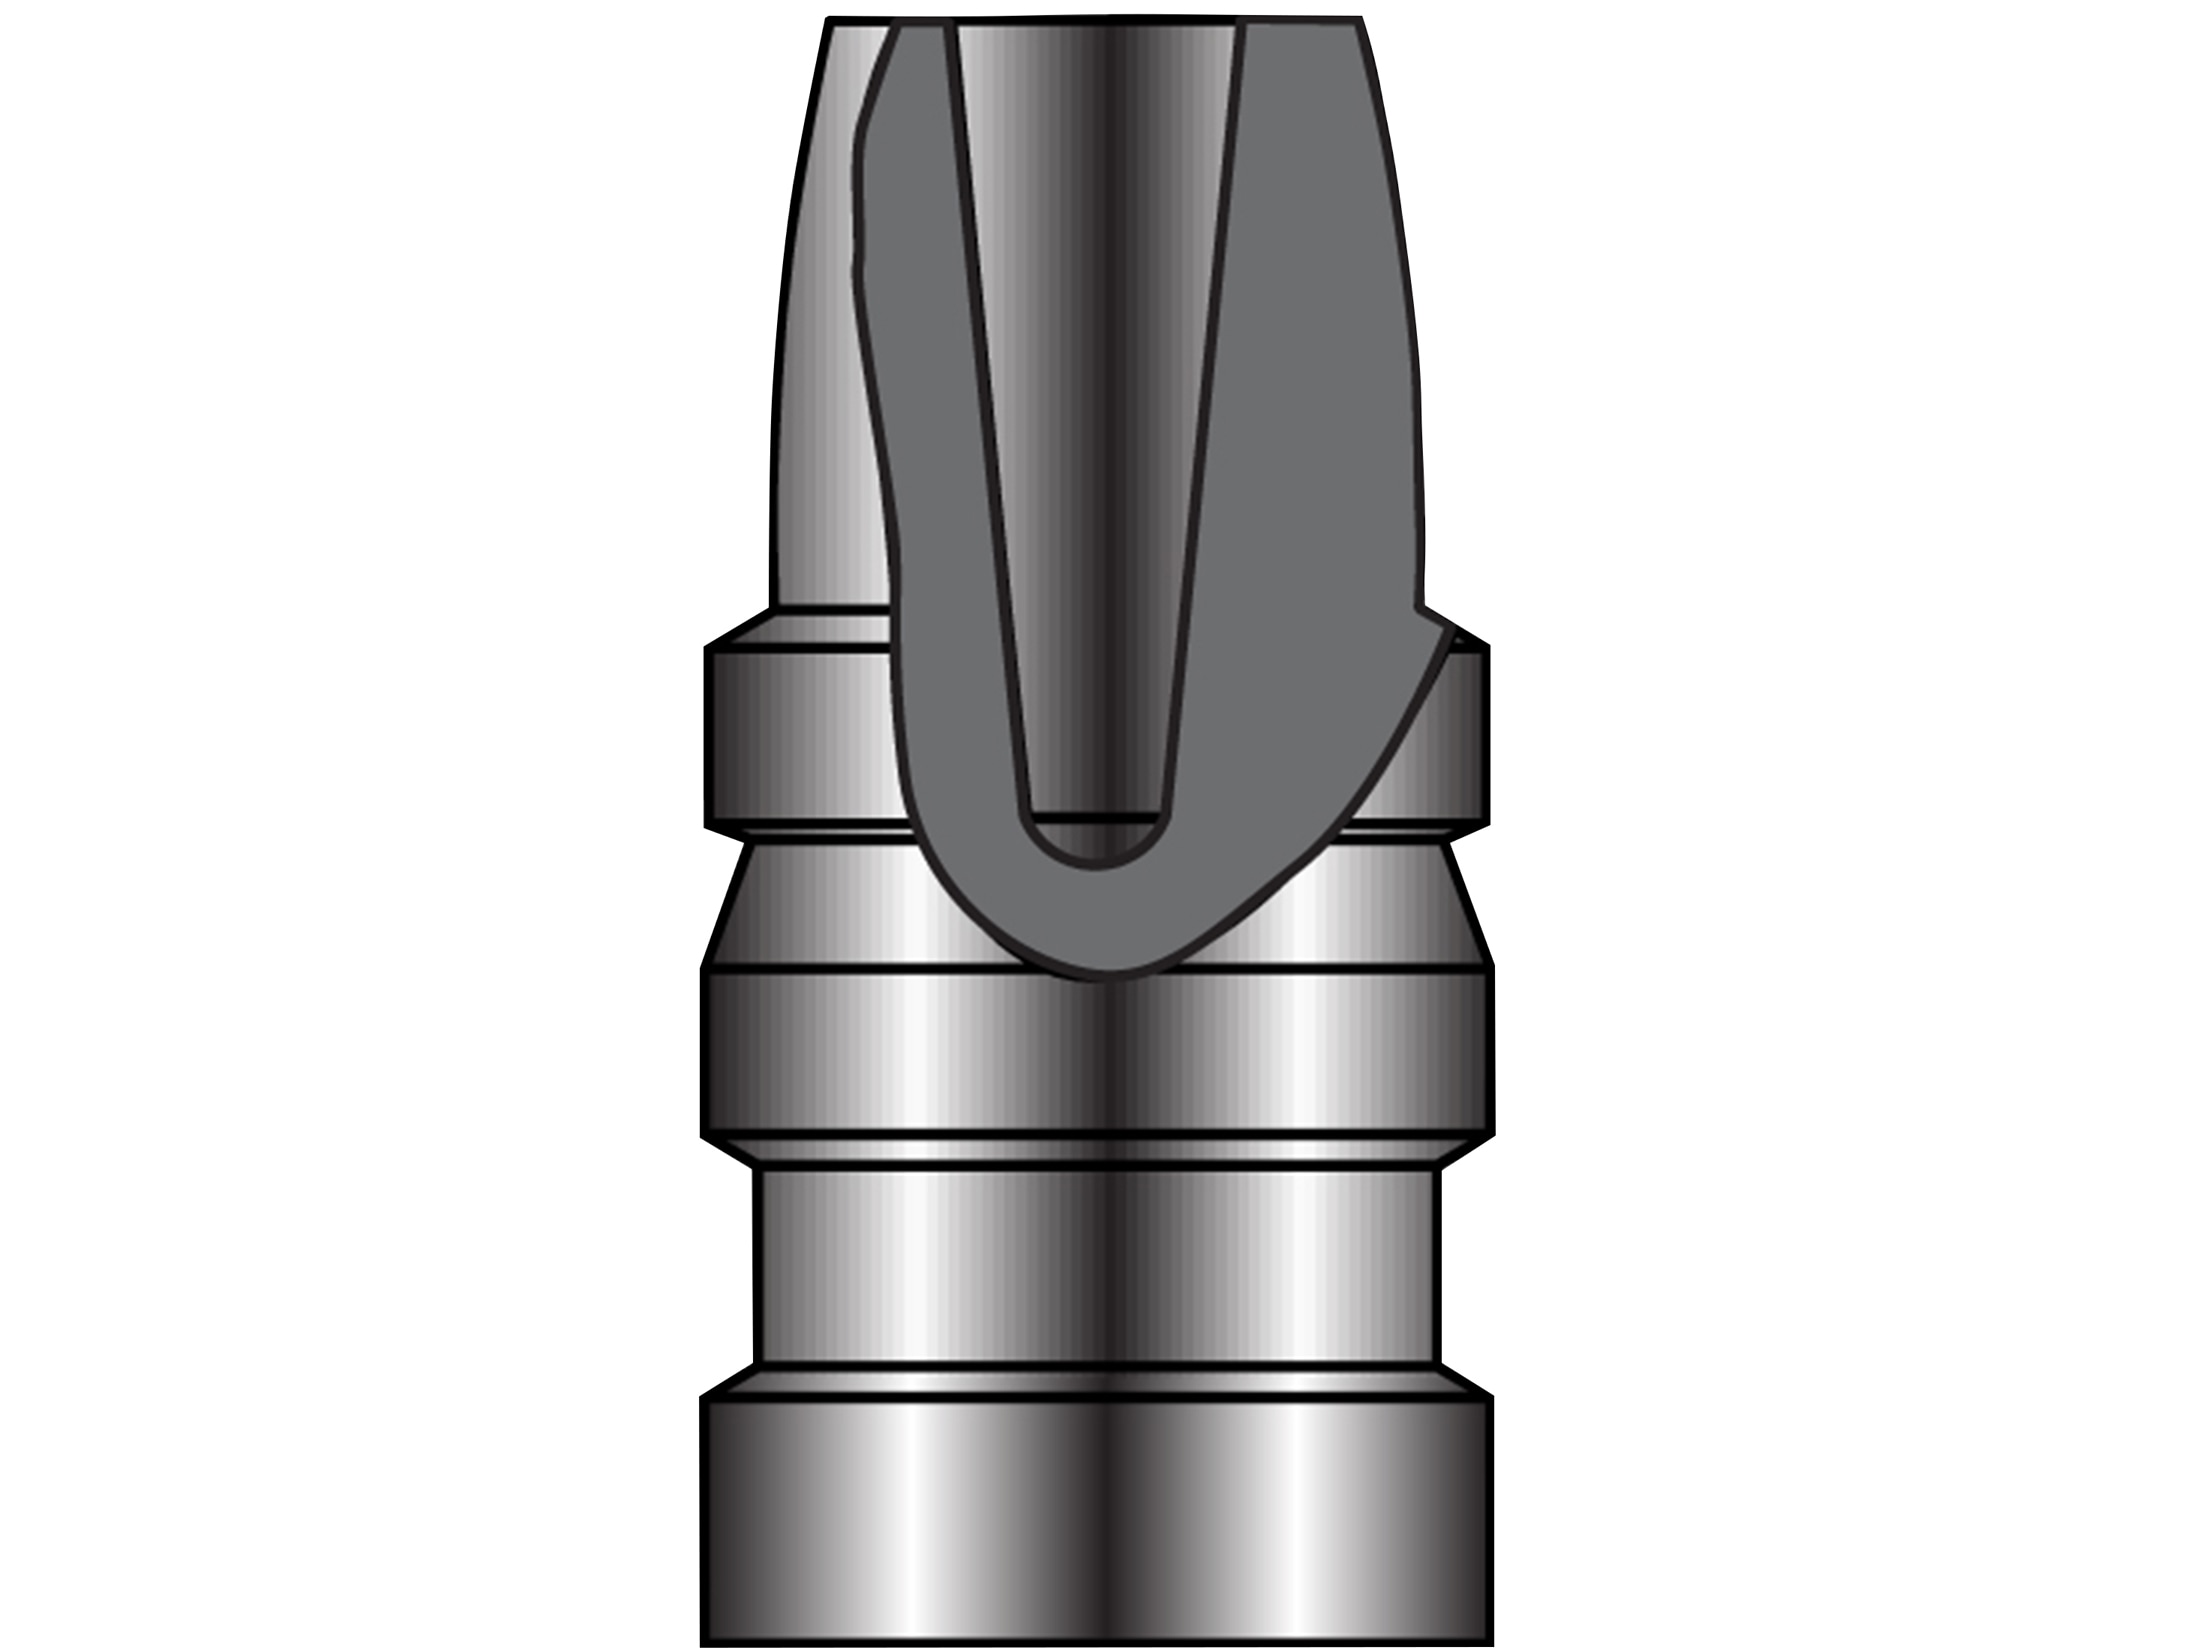 Lyman 1-Cavity Bullet Mold #358439HP 38 Special, 357 Magnum (358 Diameter) 155 Grain Semi-Wadcutter Hollow Point